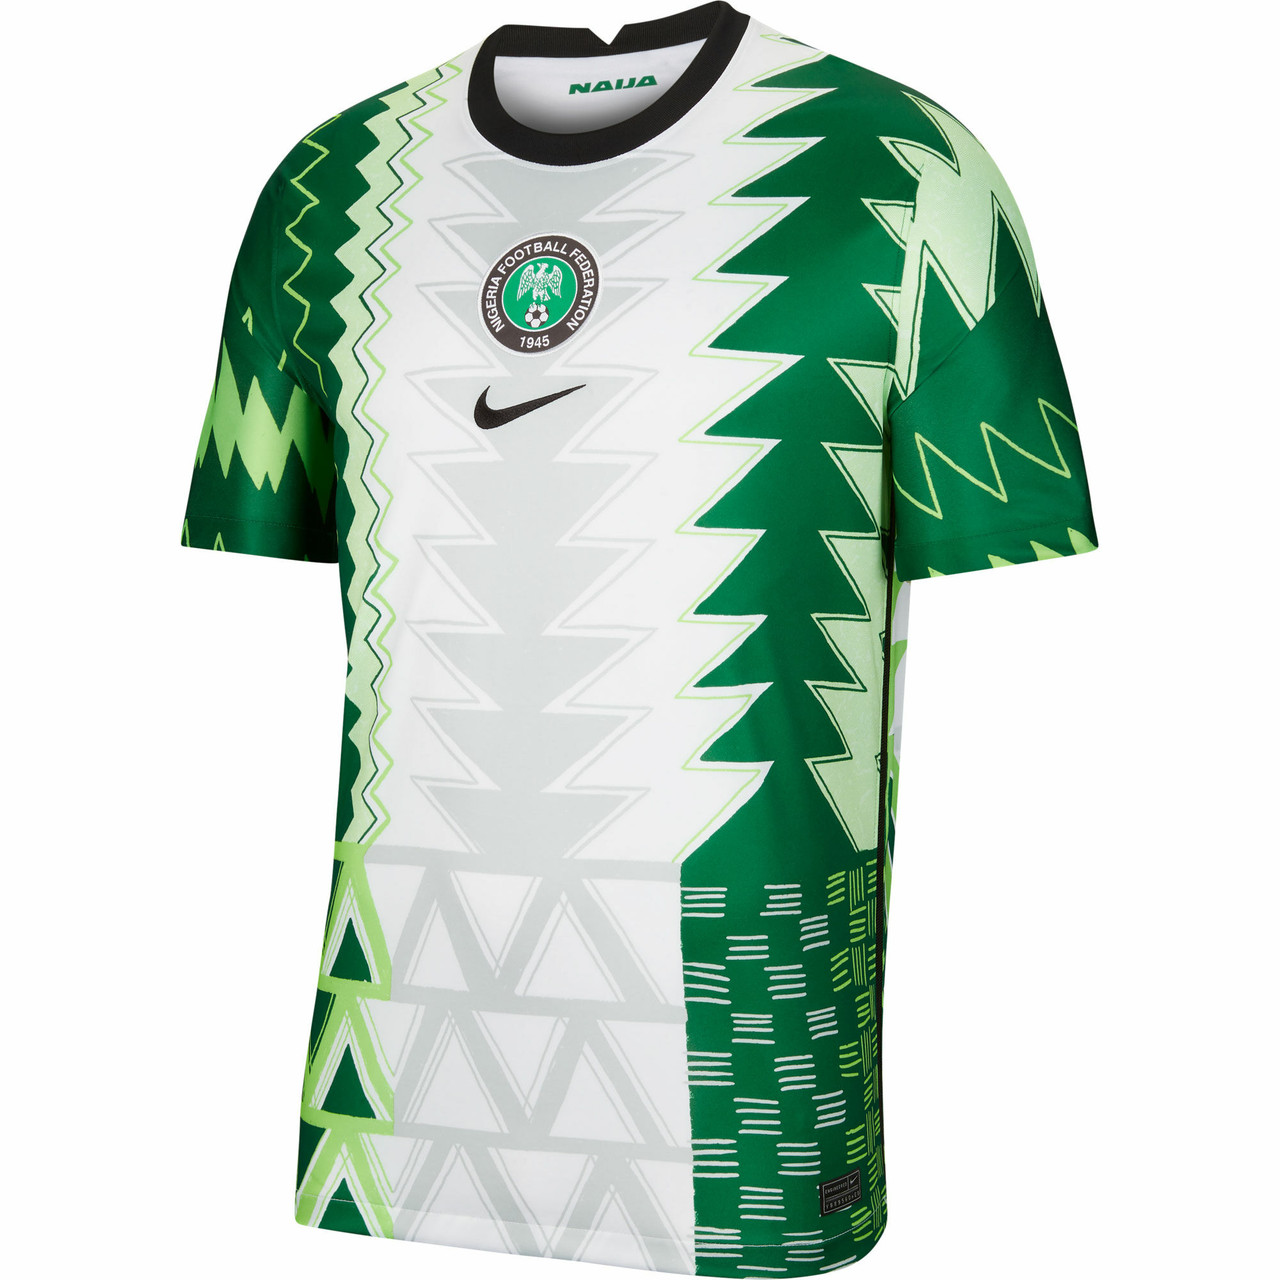 Nike Football Nigeria stadium home jersey in white